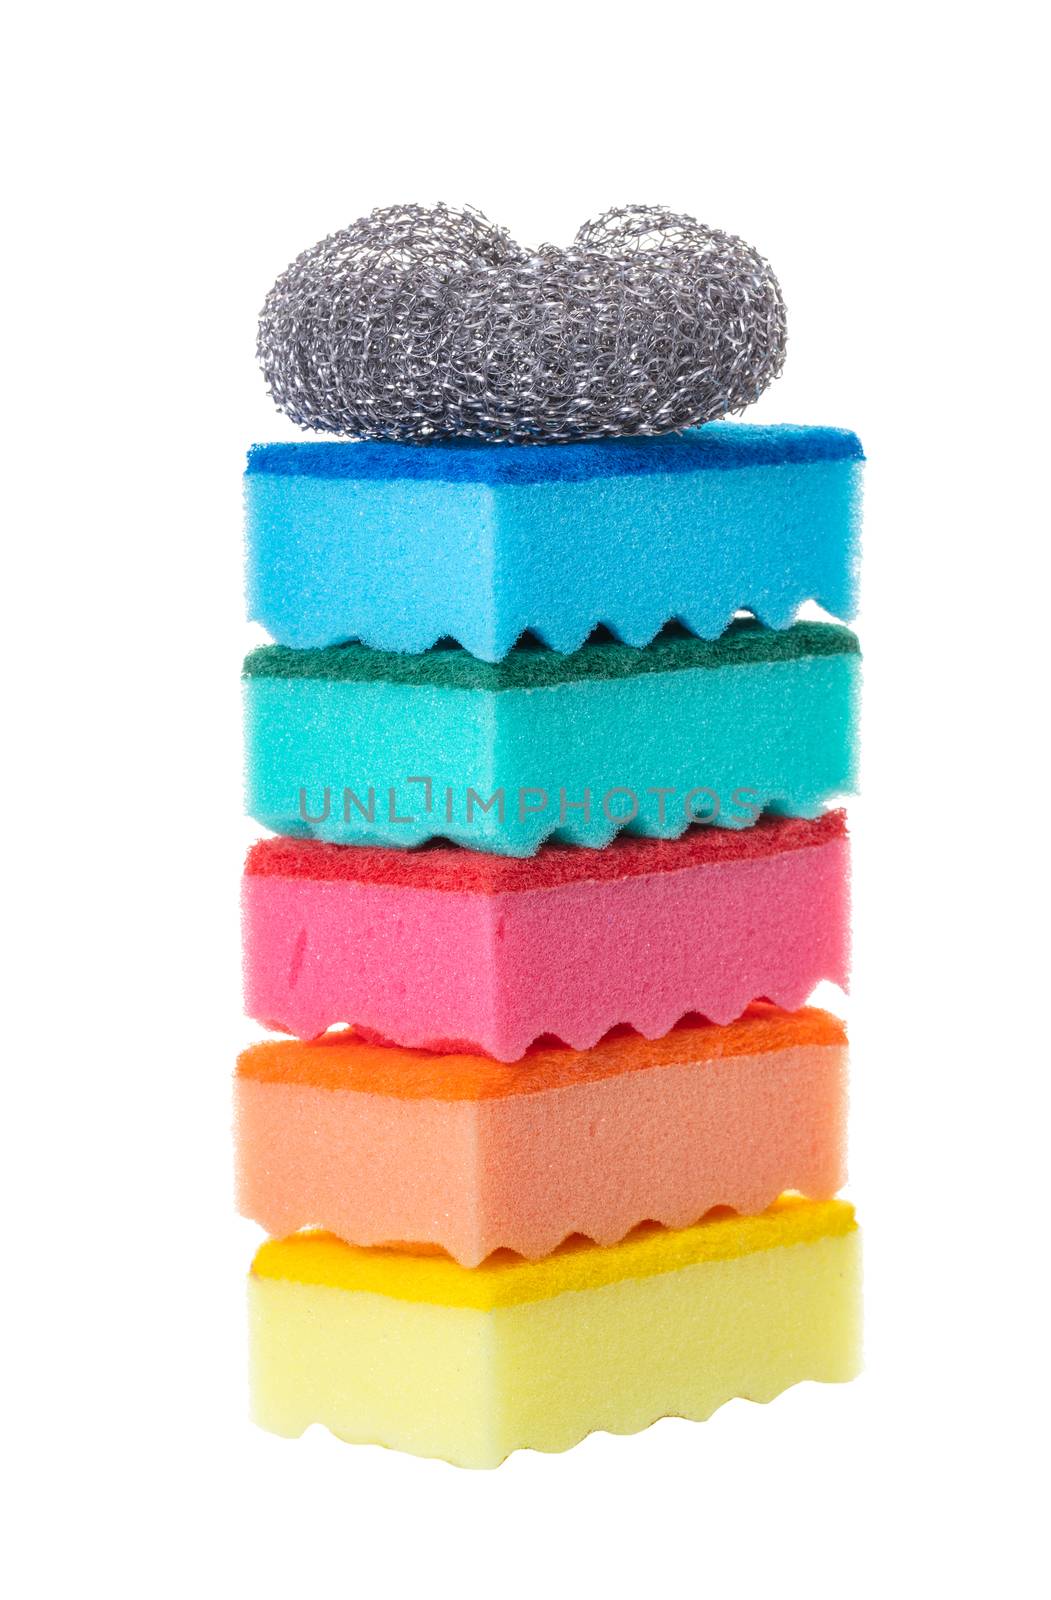 sponges for washing utensils on white isolated background